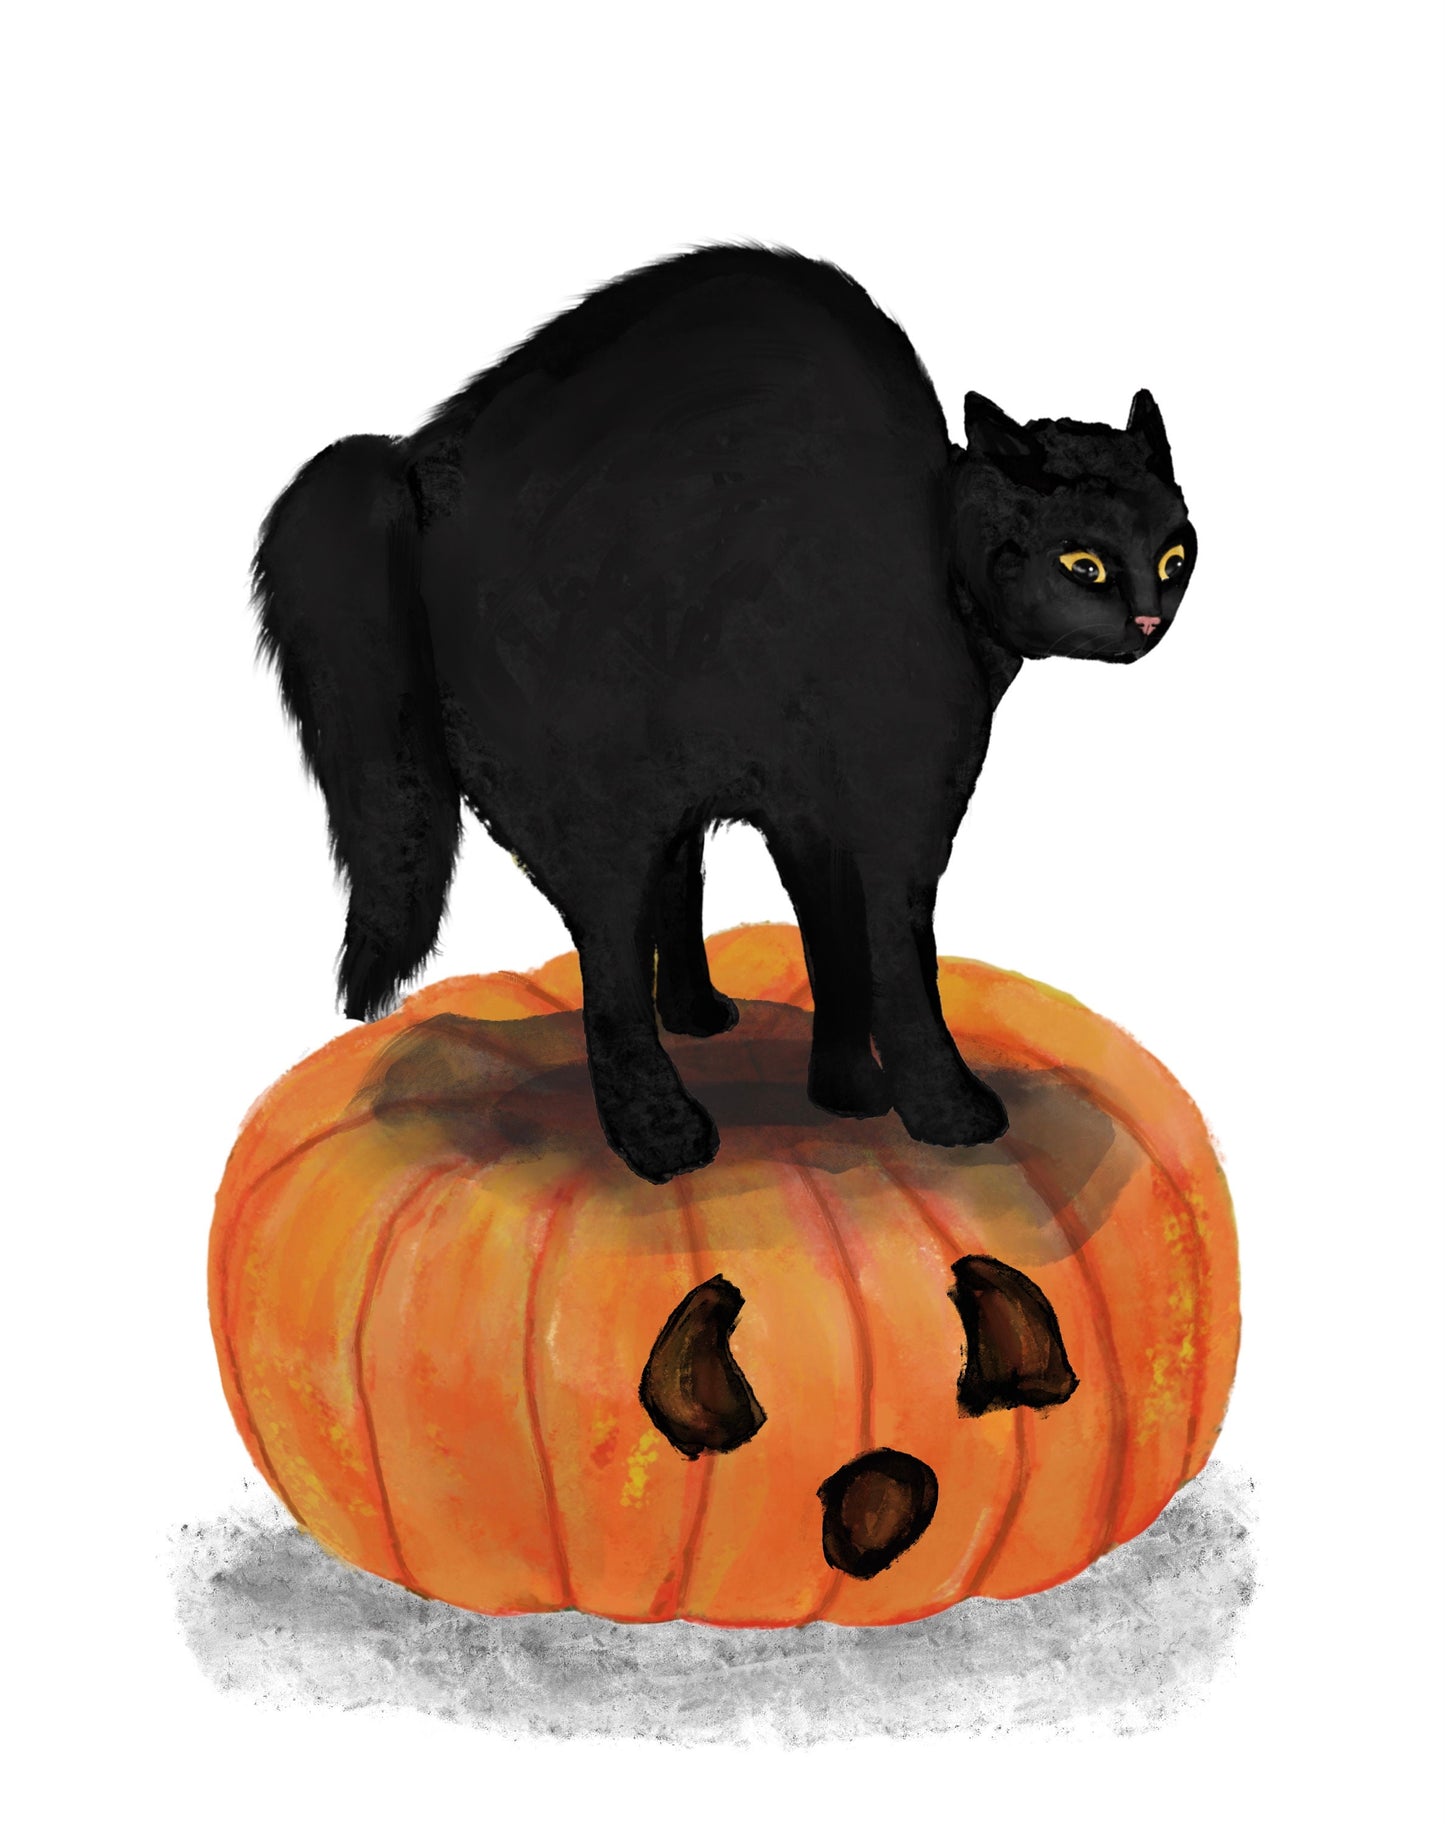 Scared Black Cat on Pumpkin Print, Halloween Cat Painting, Black Cat Portrait, Holiday Wall Art, Defensive Black Cat